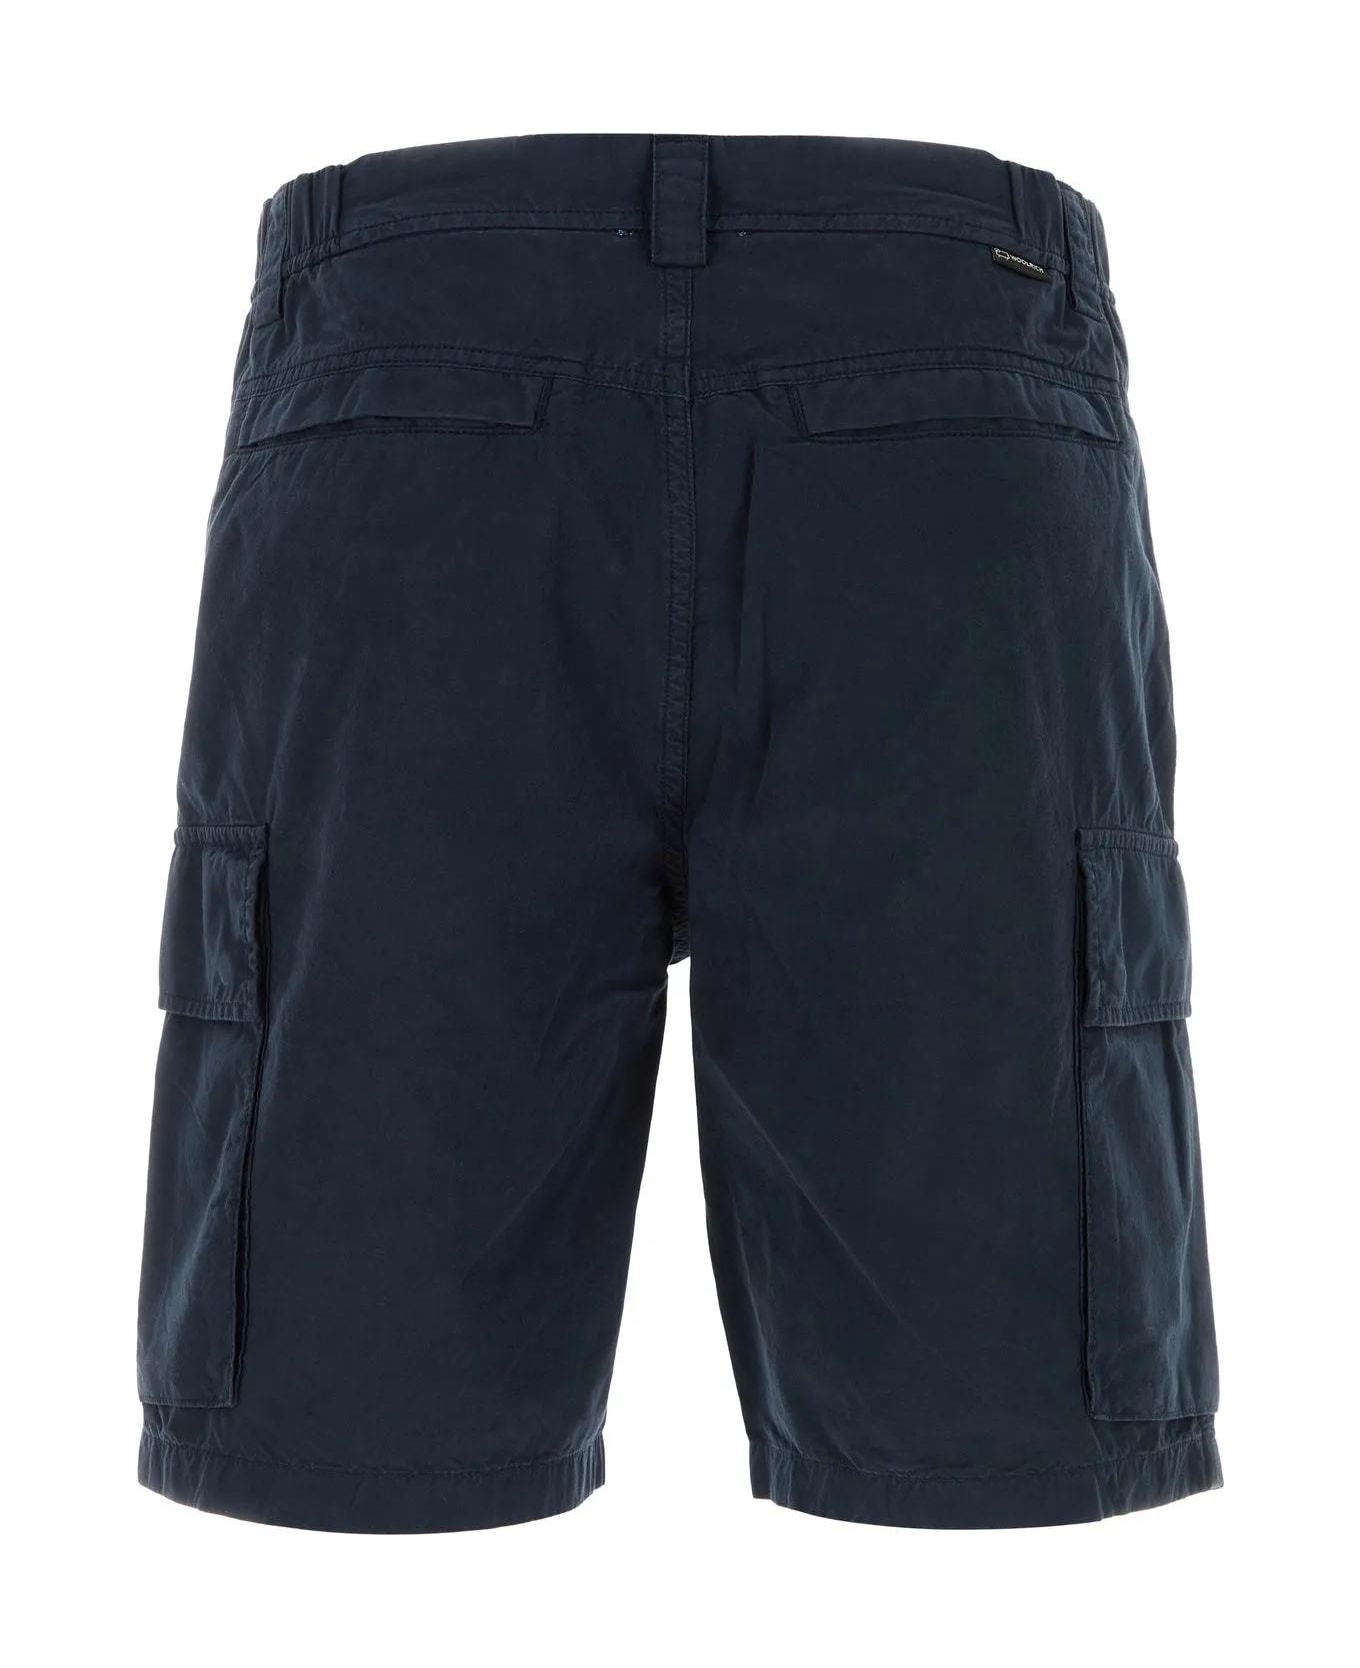 Woolrich Blue Cotton Bermuda Shorts - Melton blue